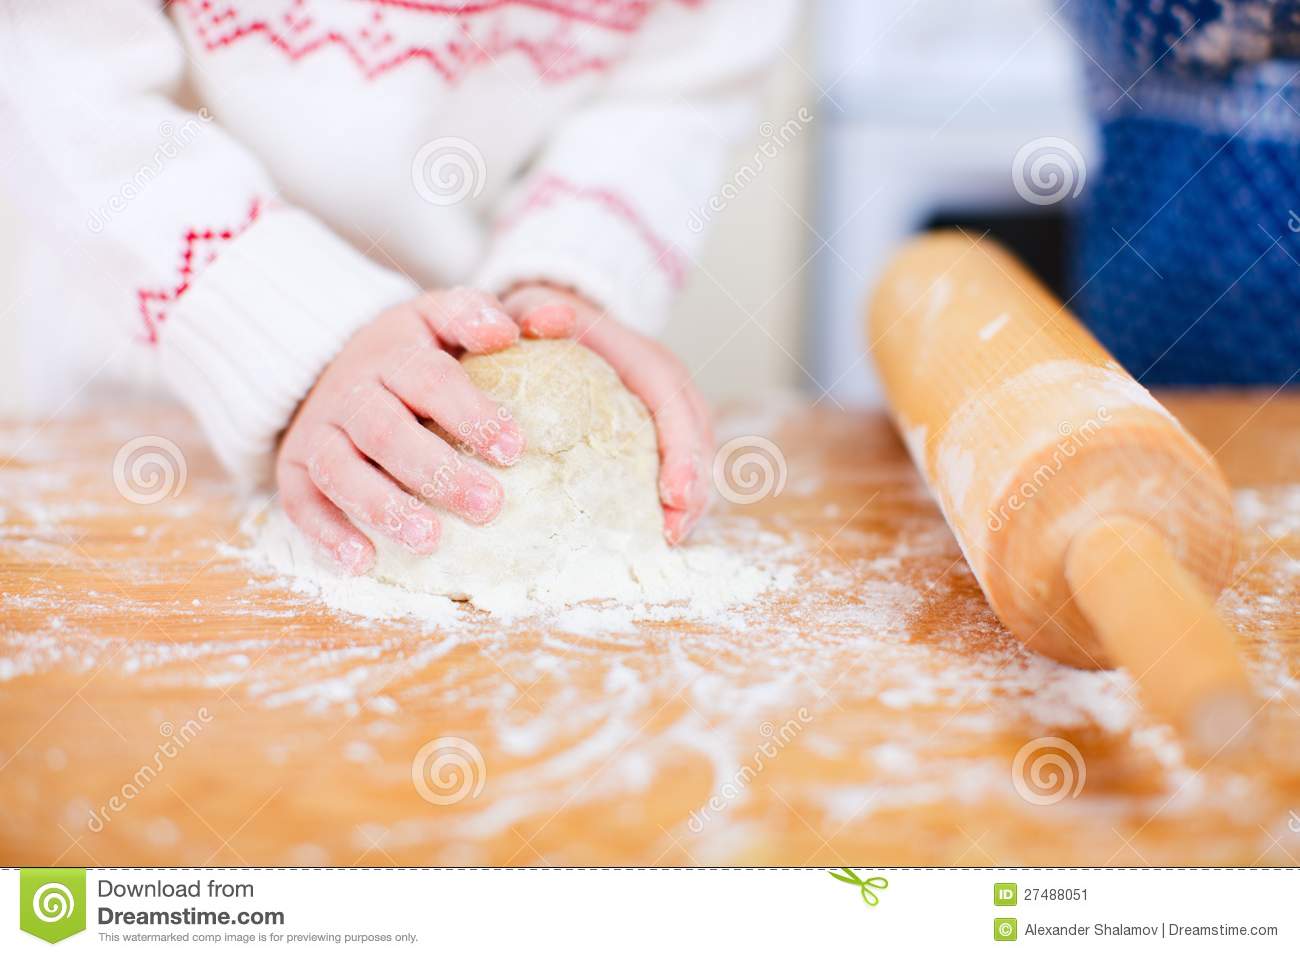 Kneading Dough Stock Image   Image  27488051